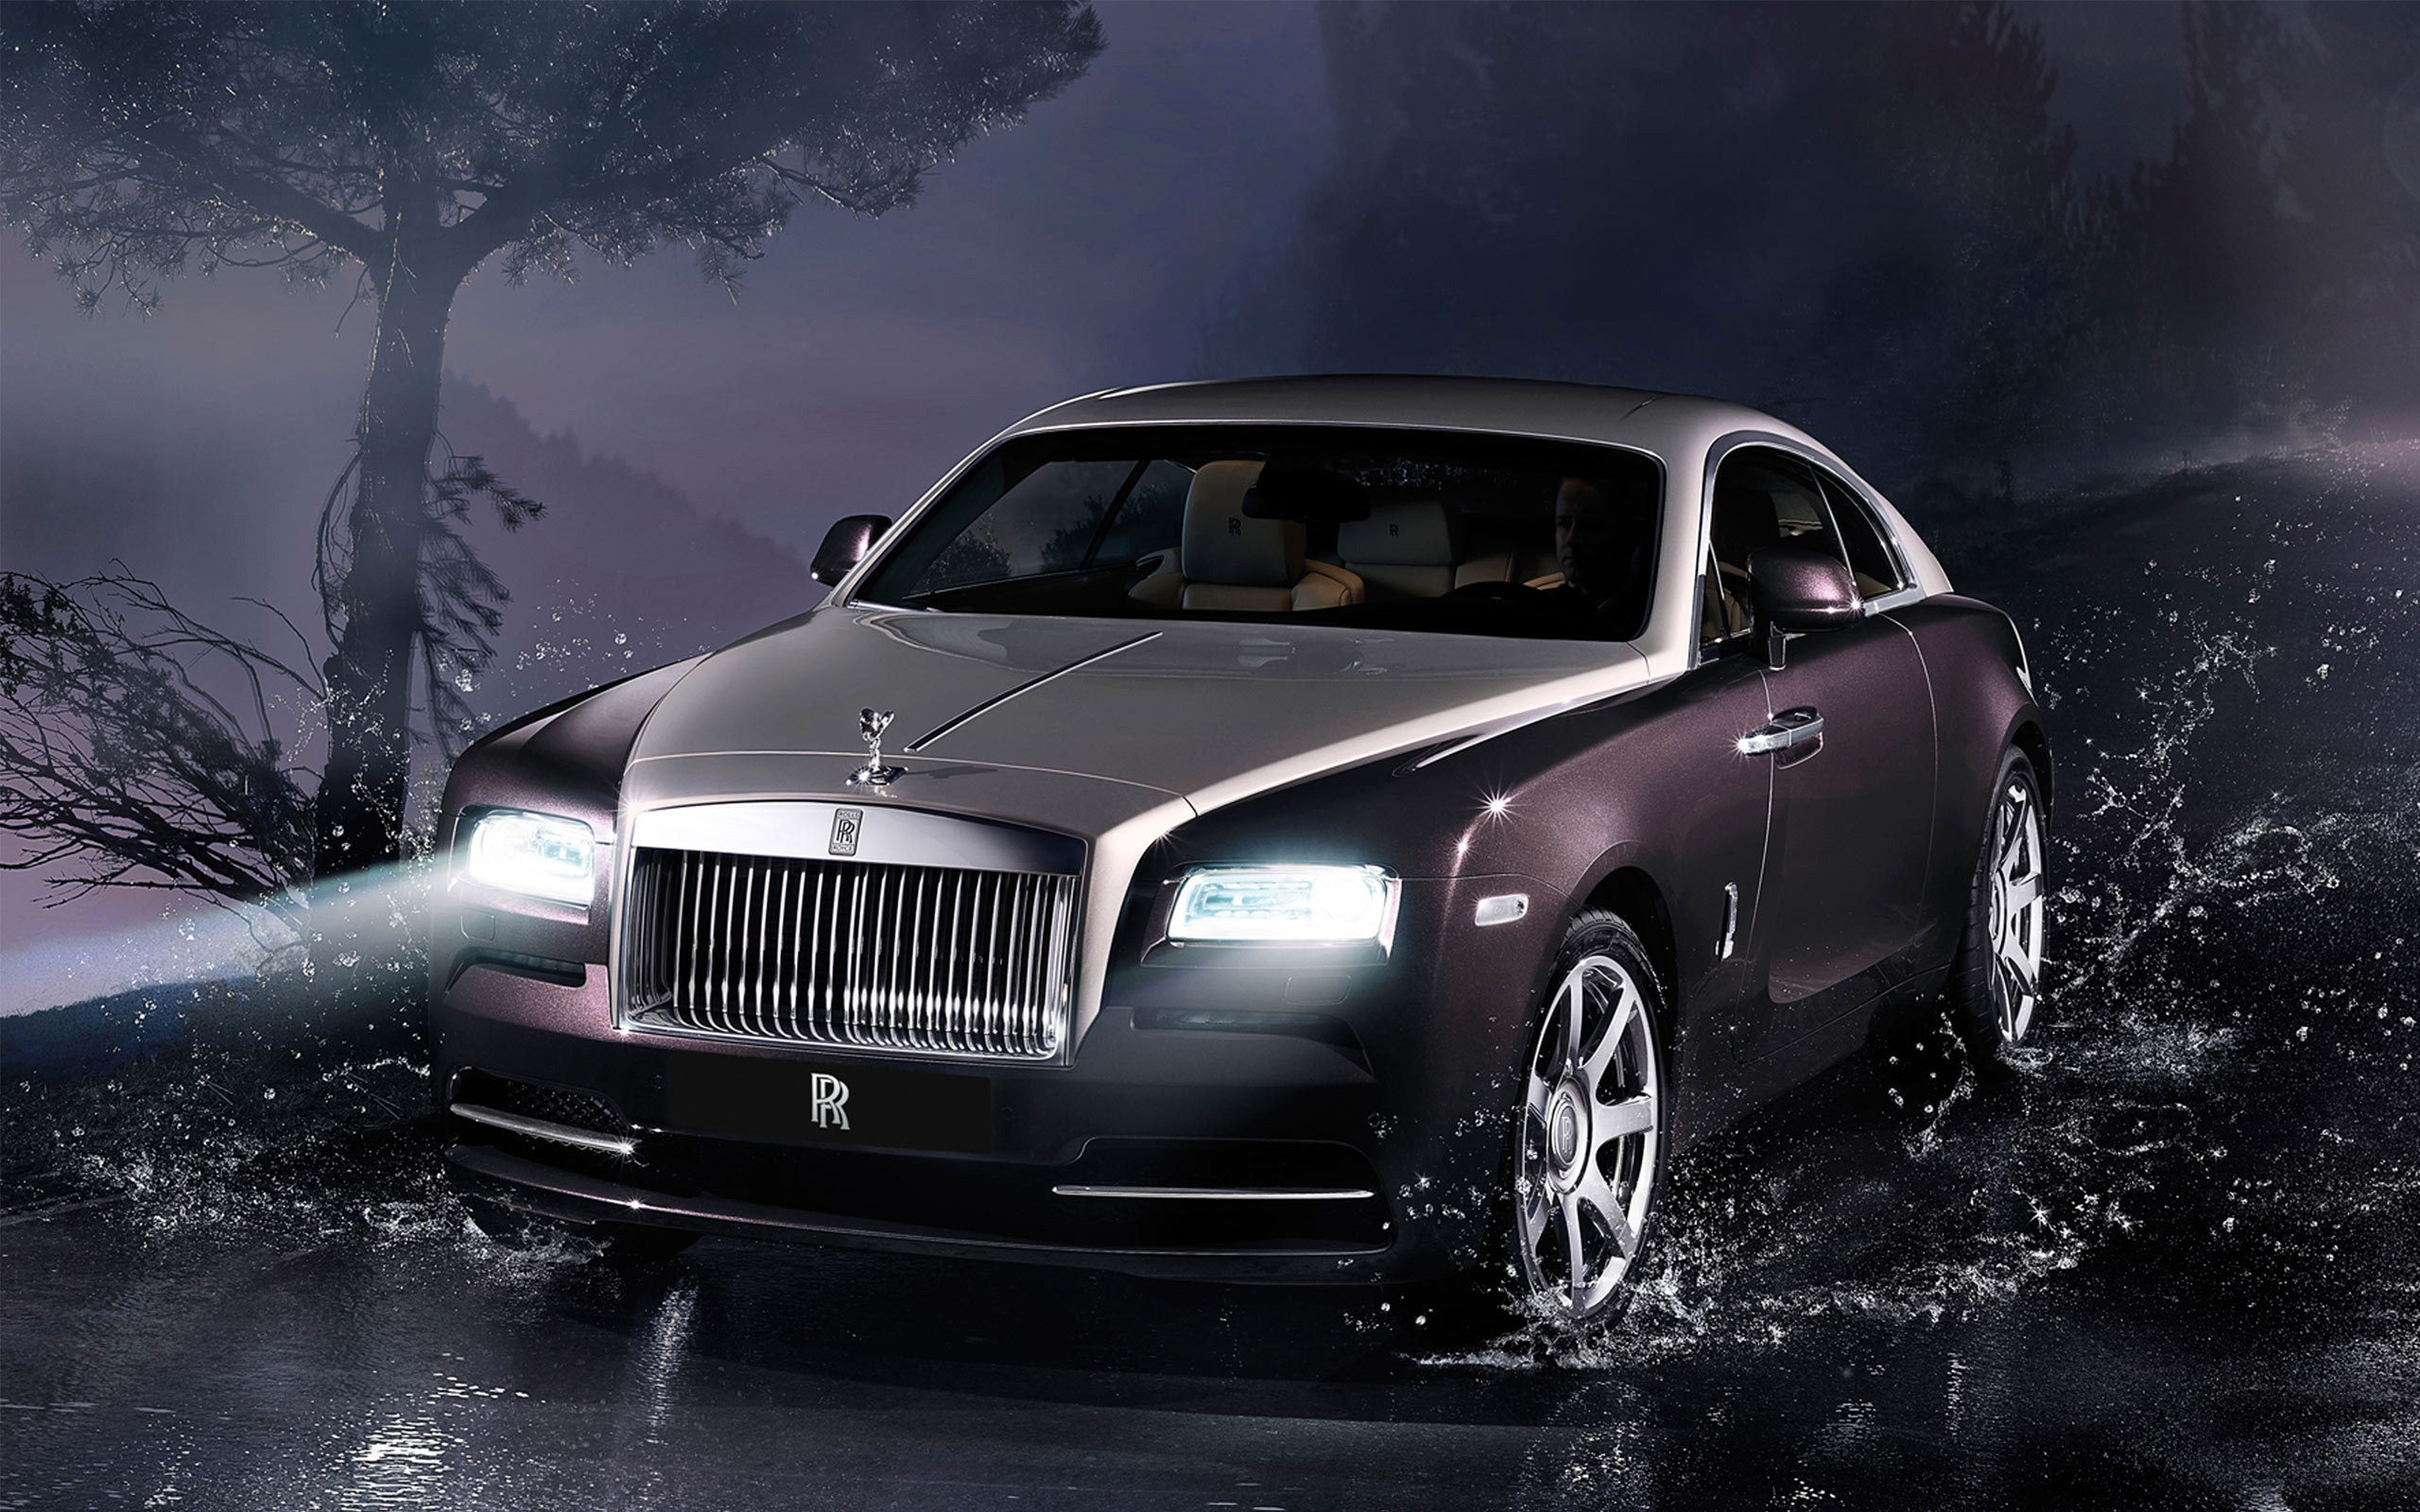 Rolls Royce Wraith 2014 Wallpaper | HD Car Wallpapers | ID #3301